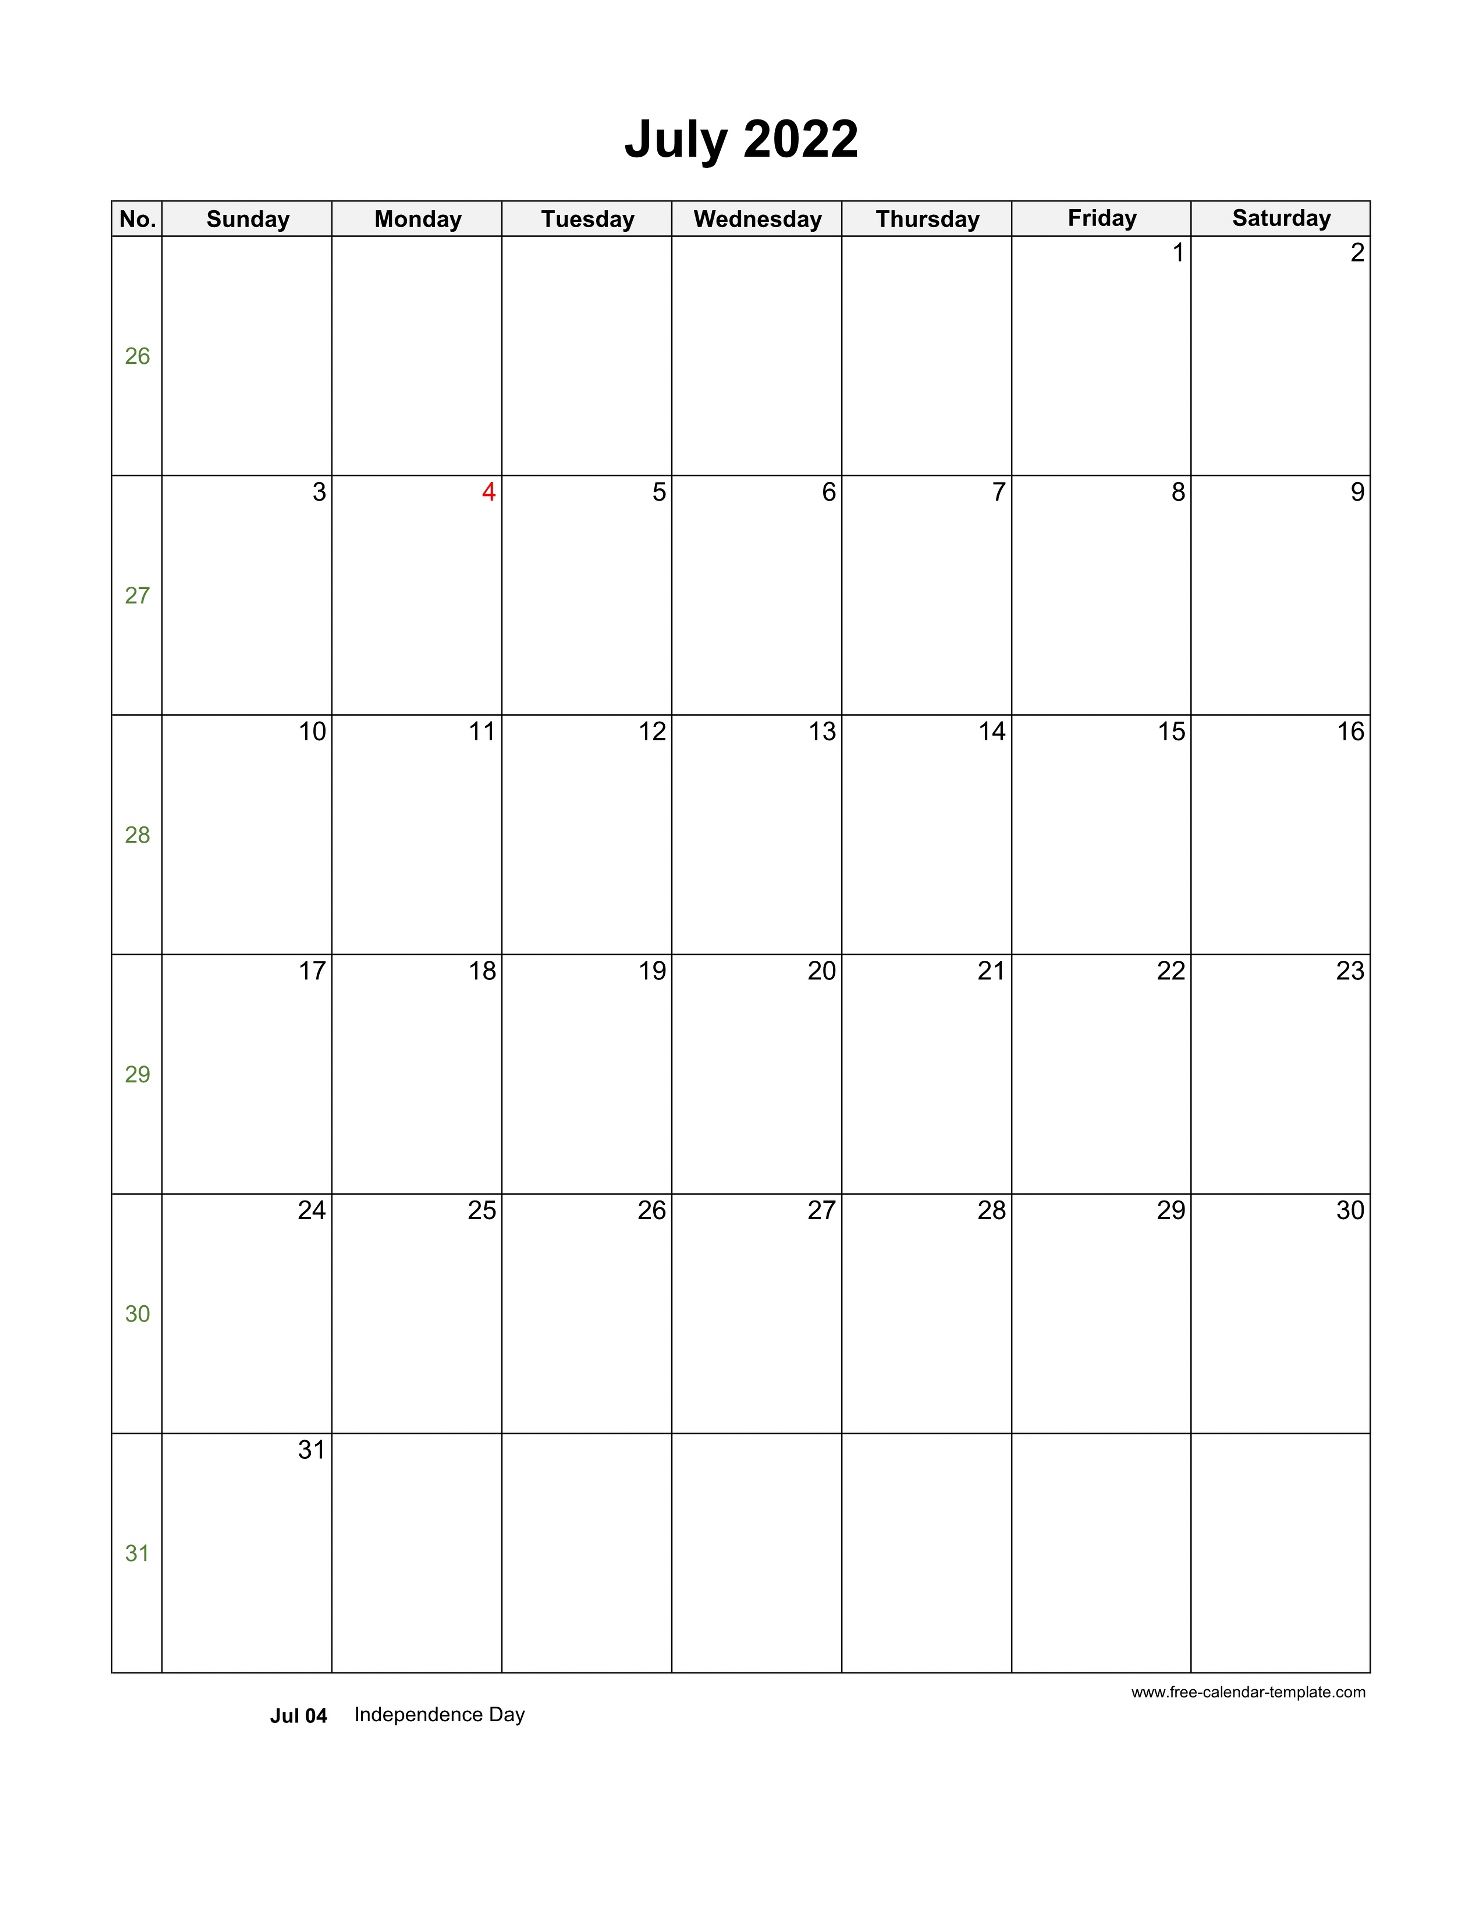 Blank Calendar Template July 2022 - Customize and Print